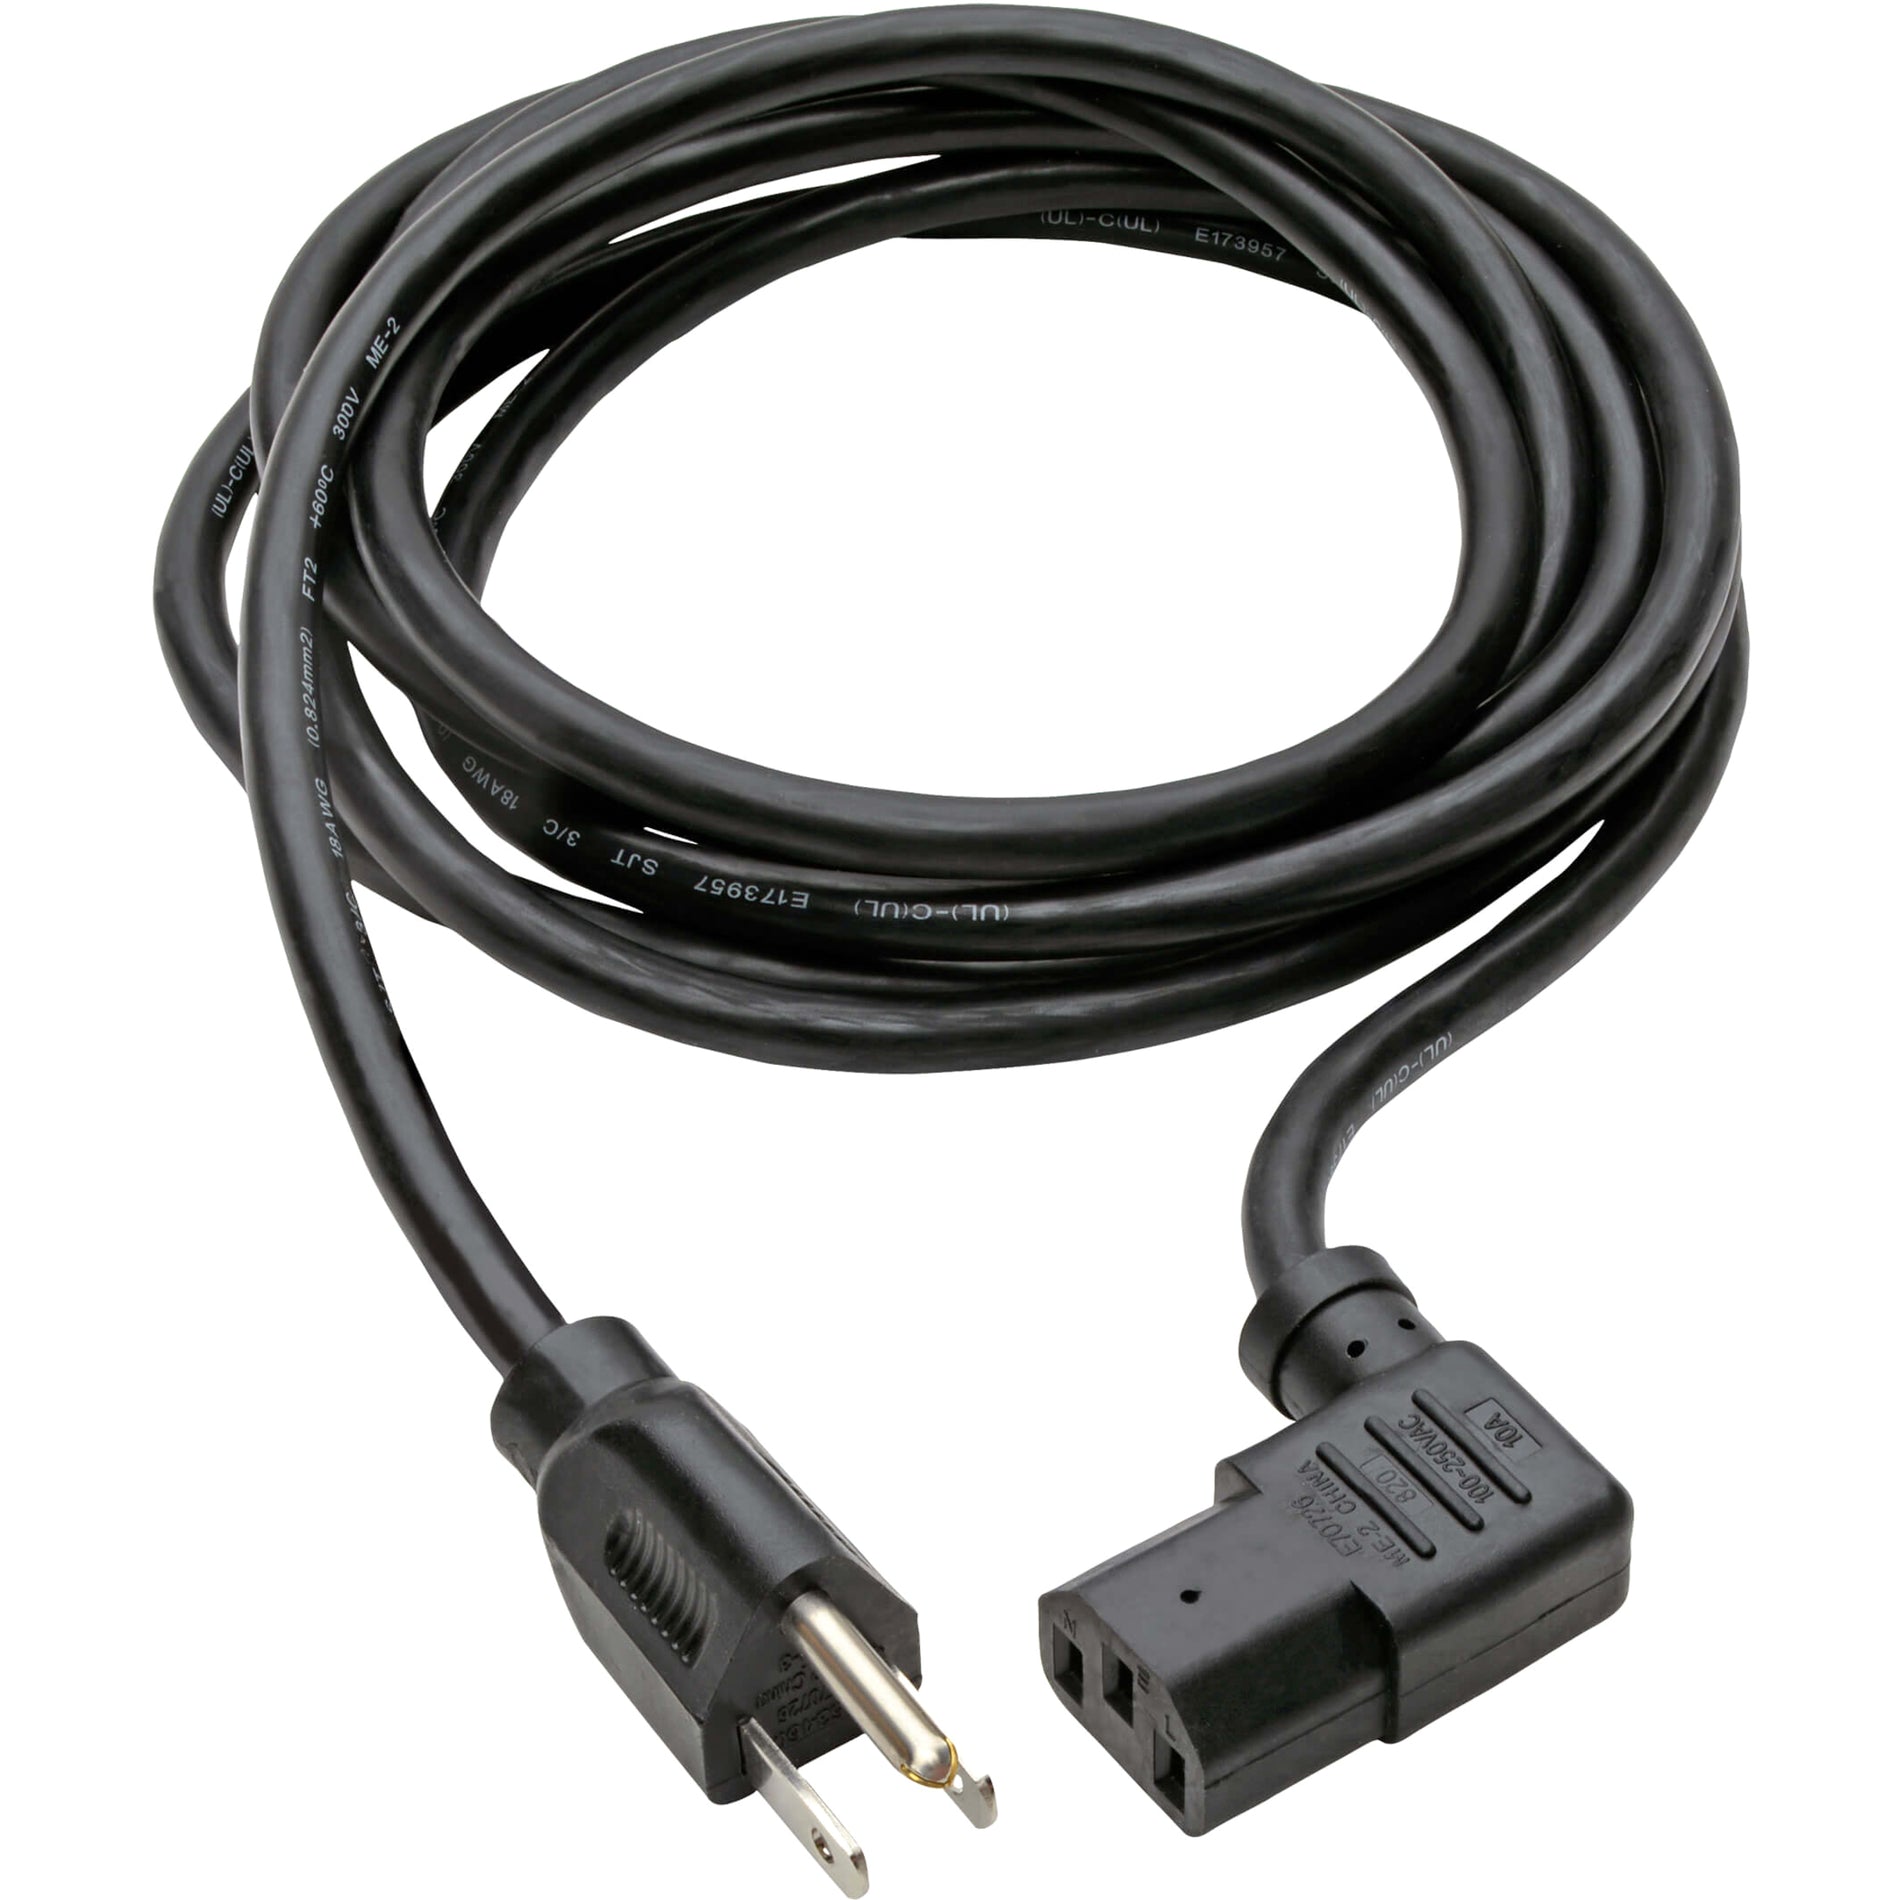 Tripp Lite P006-010-13RA Standard Power Cord, 10 ft, 125V AC, 10A, NEMA 5-15P to IEC 60320 C13, Black